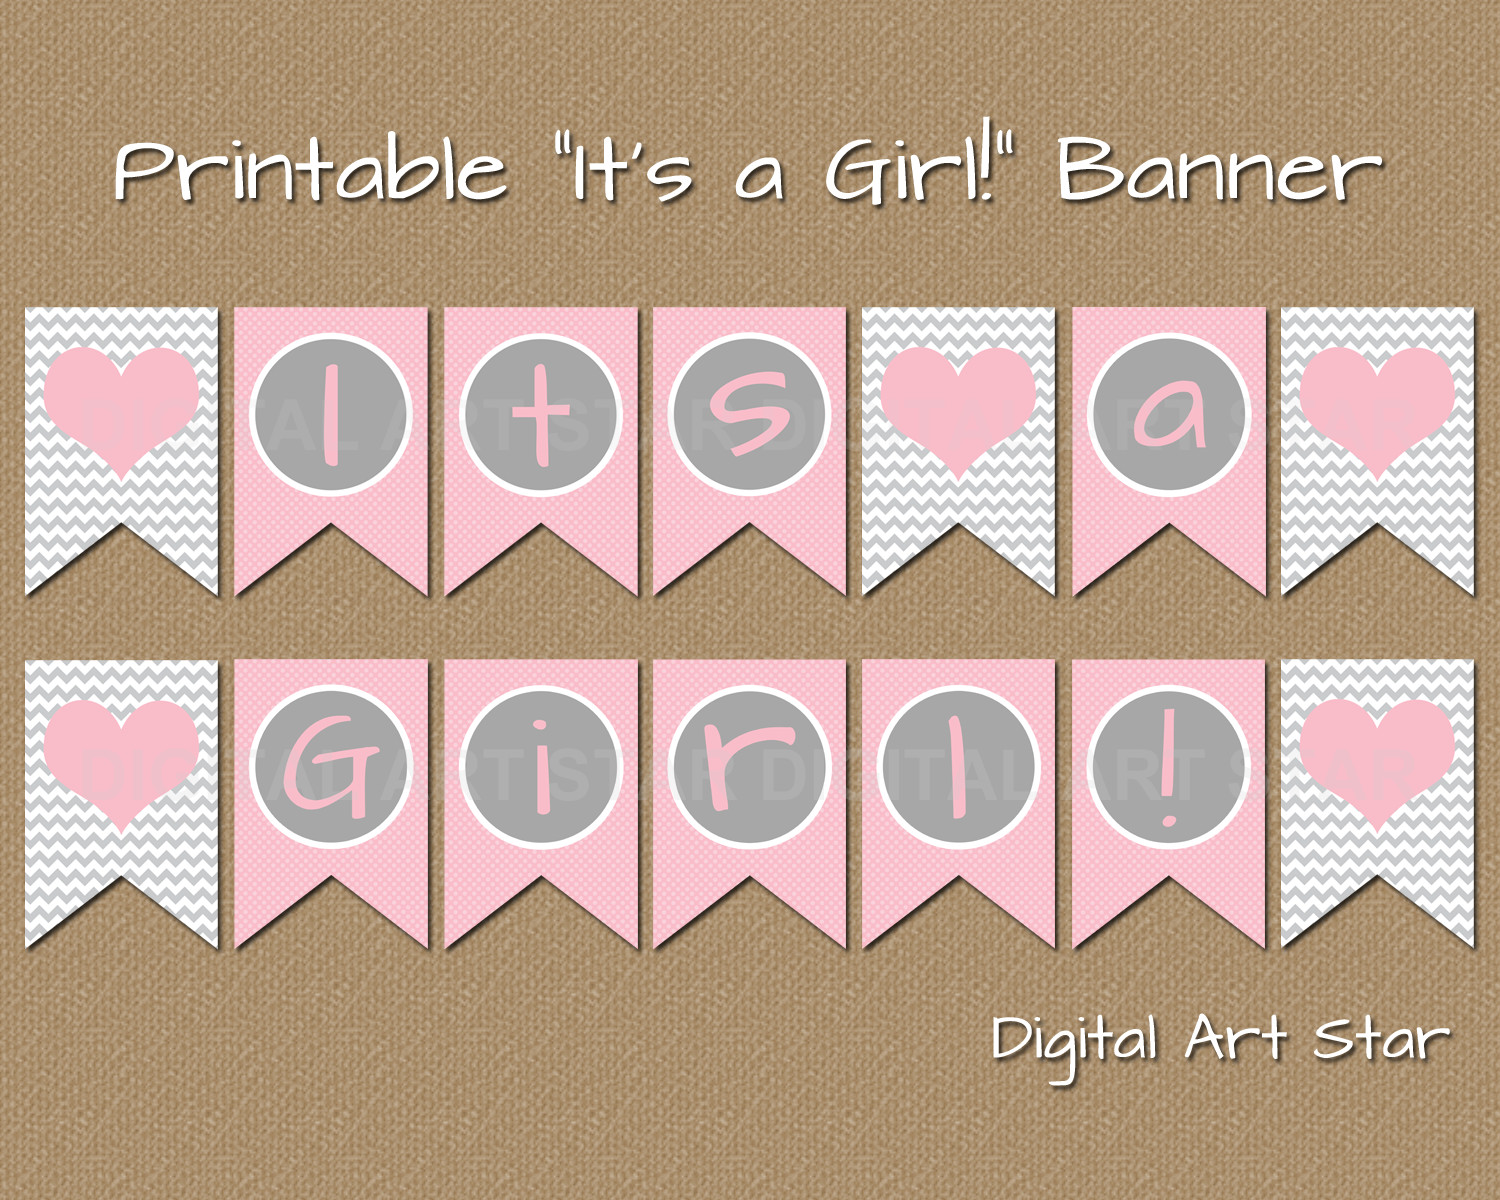 Baby Shower Banner Templates Digital Art Star Printable Party Decor February 2014